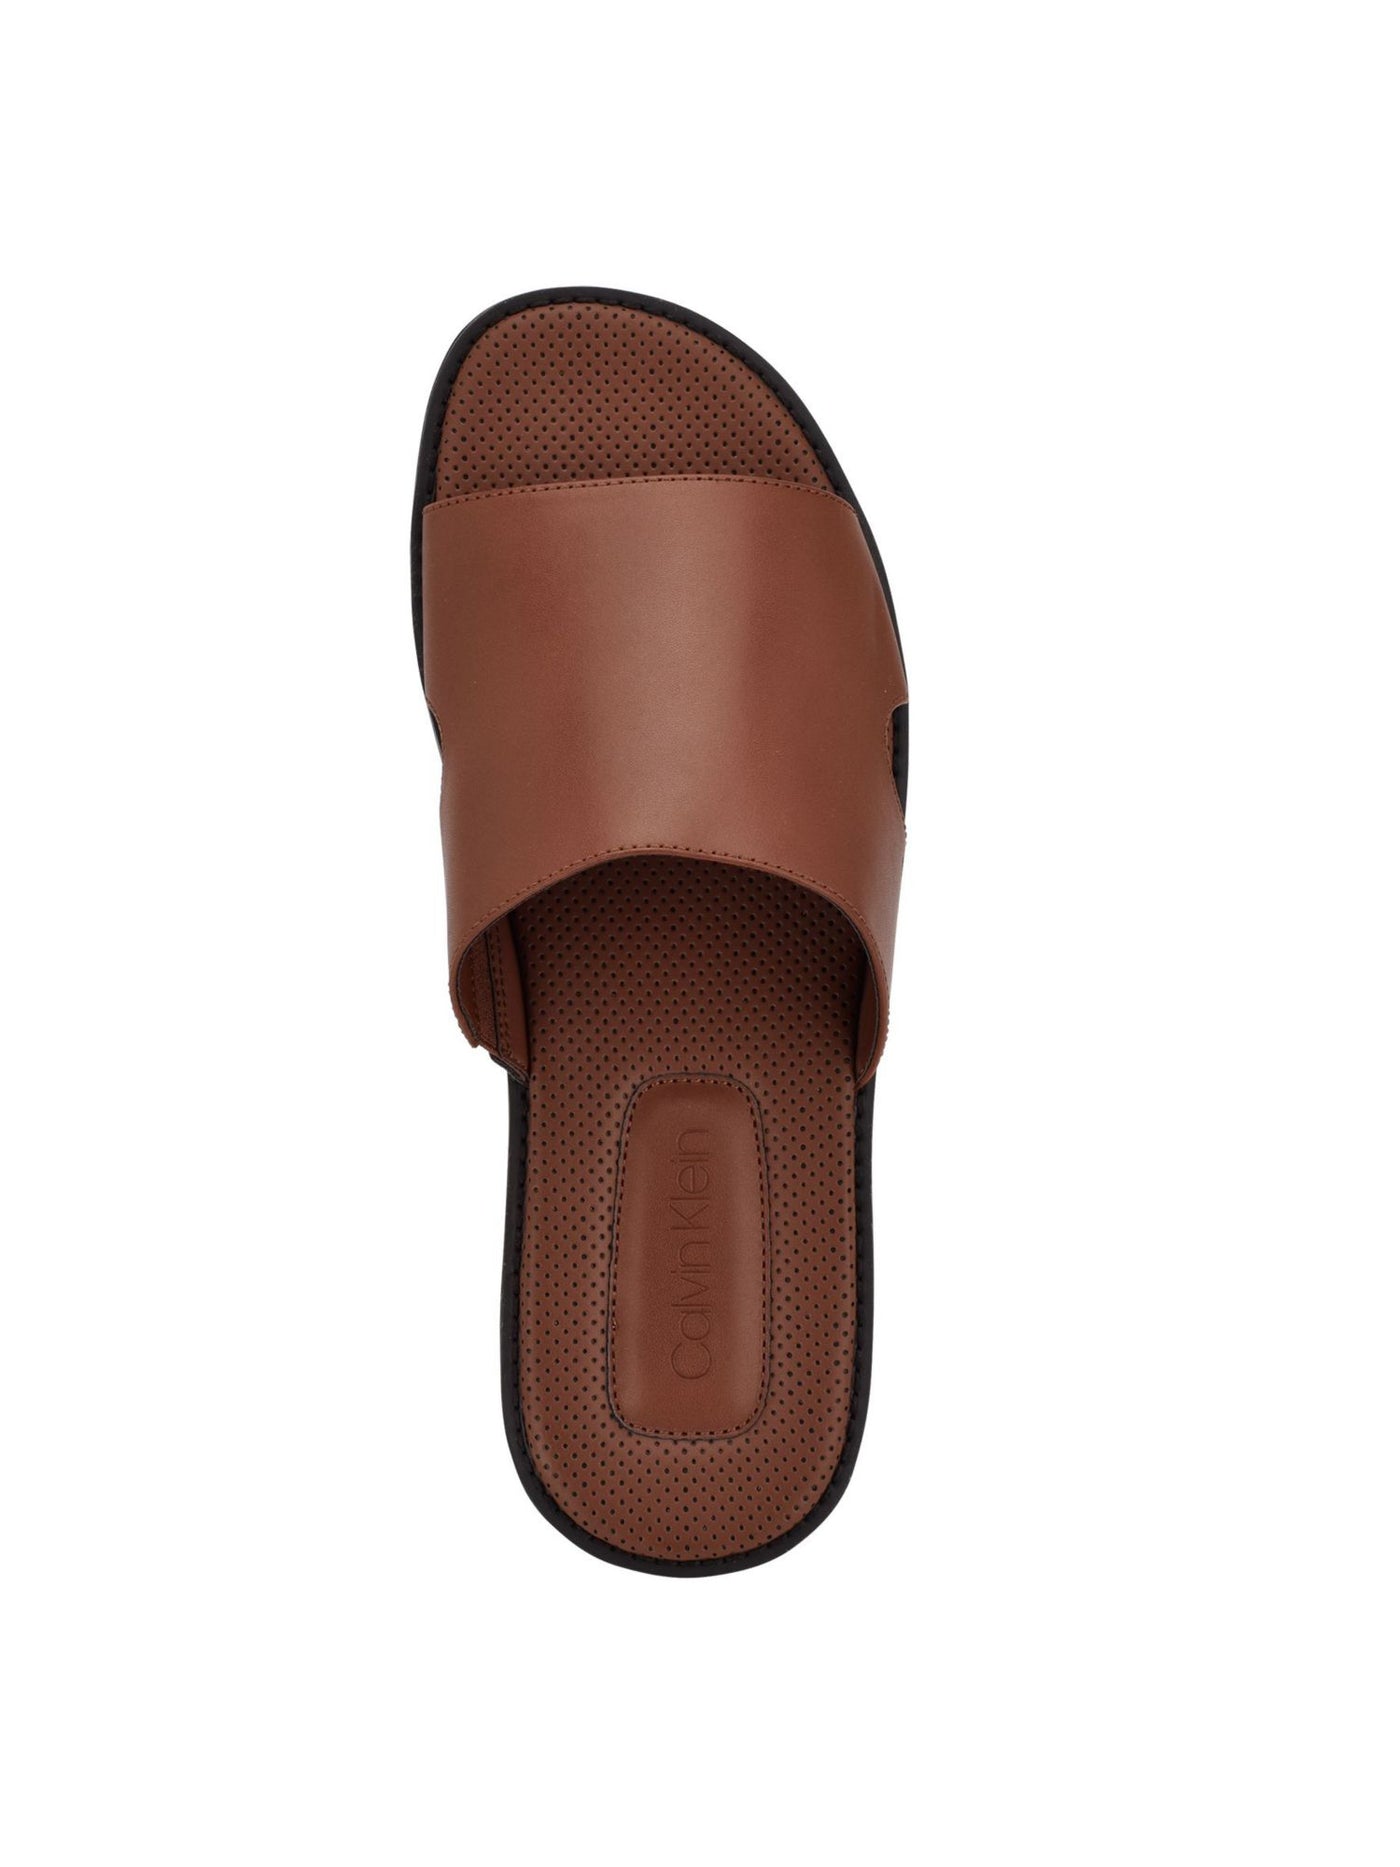 CALVIN KLEIN Mens Brown Padded Goring Ethan Round Toe Wedge Slip On Slide Sandals Shoes 10.5